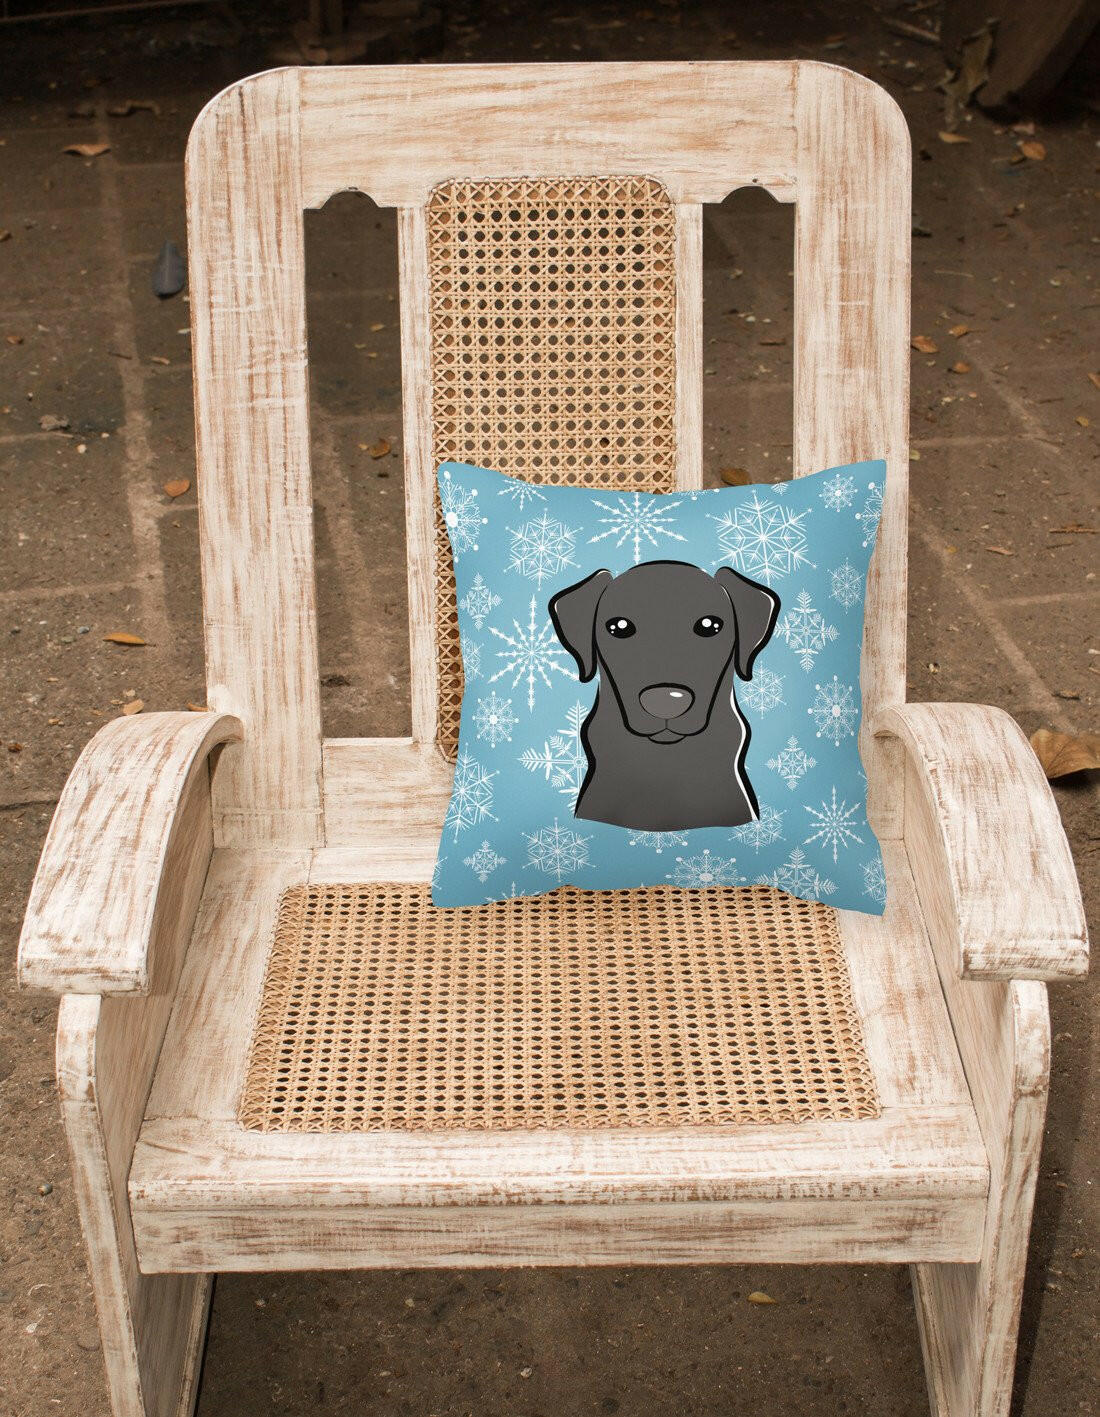 Snowflake Black Labrador Fabric Decorative Pillow BB1669PW1414 - the-store.com